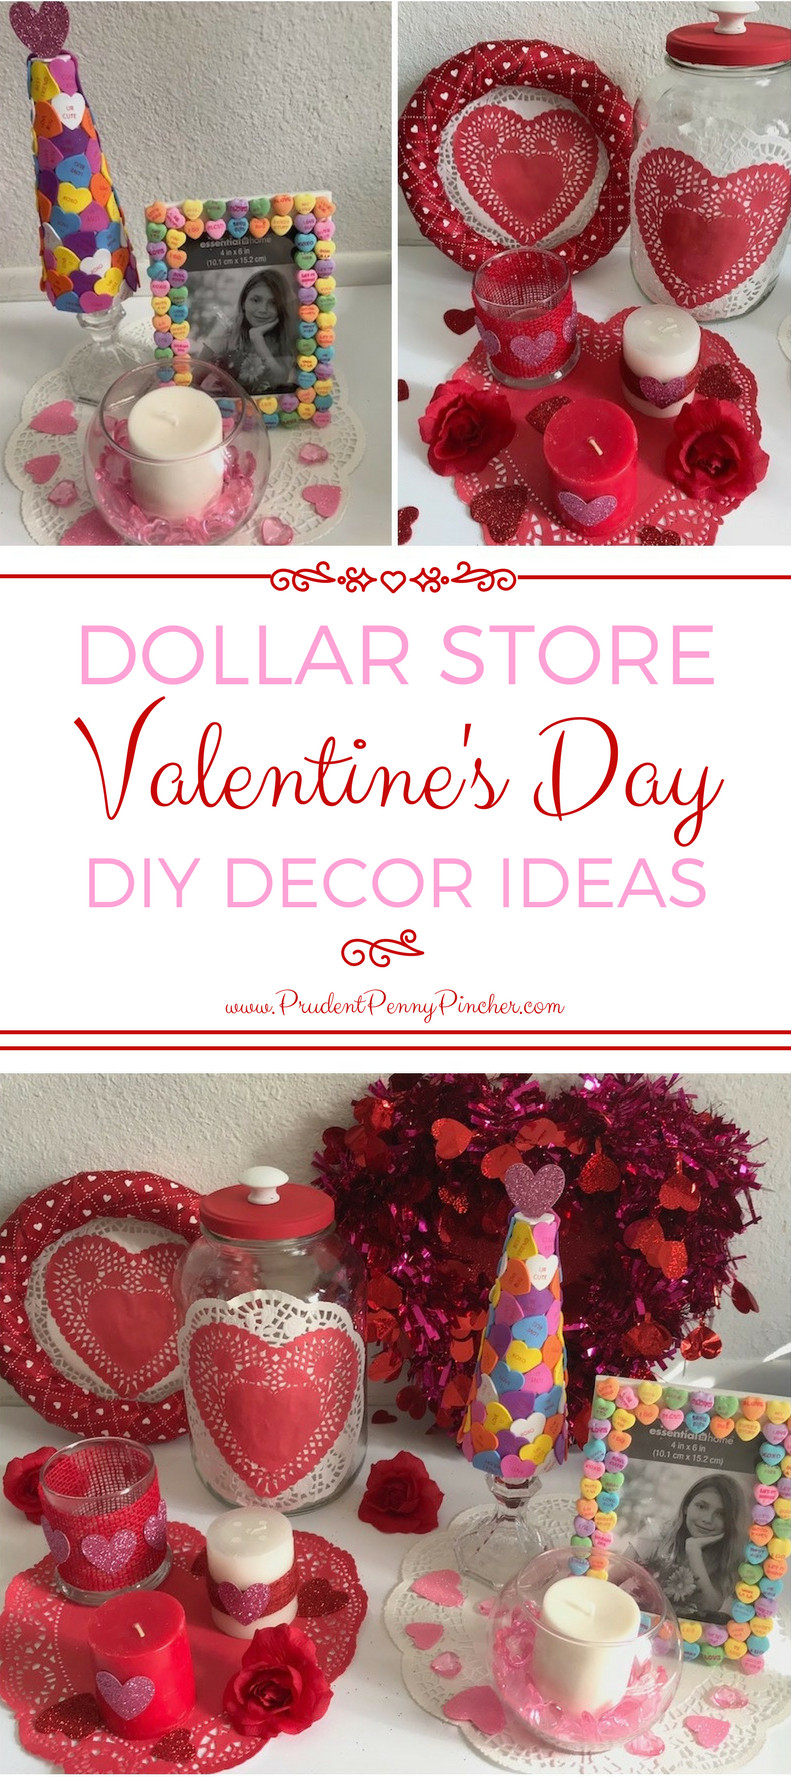 Valentines Day Decor Ideas
 Dollar Store Valentine s Day Decor Ideas Prudent Penny